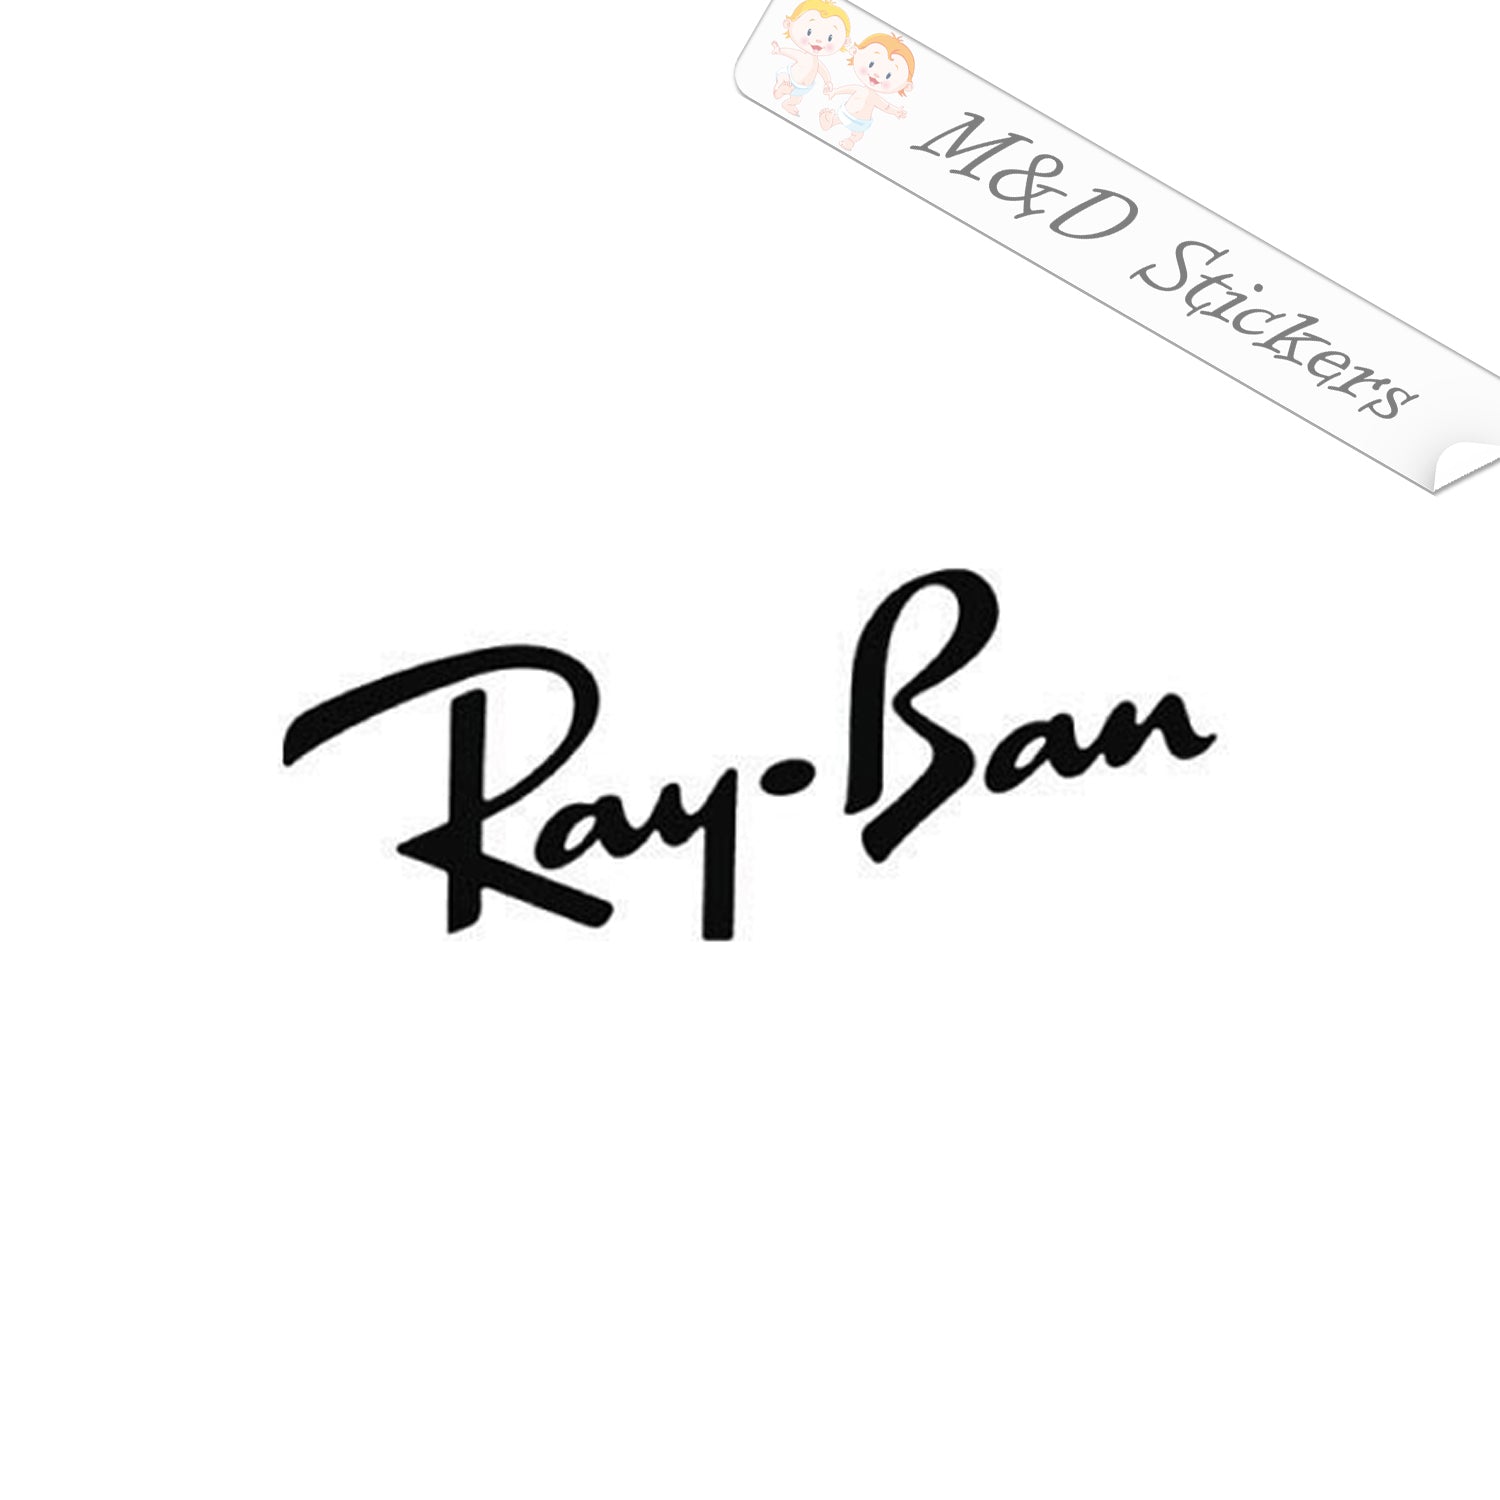 2x Ray Ban Logo Vinyl Decal Sticker 